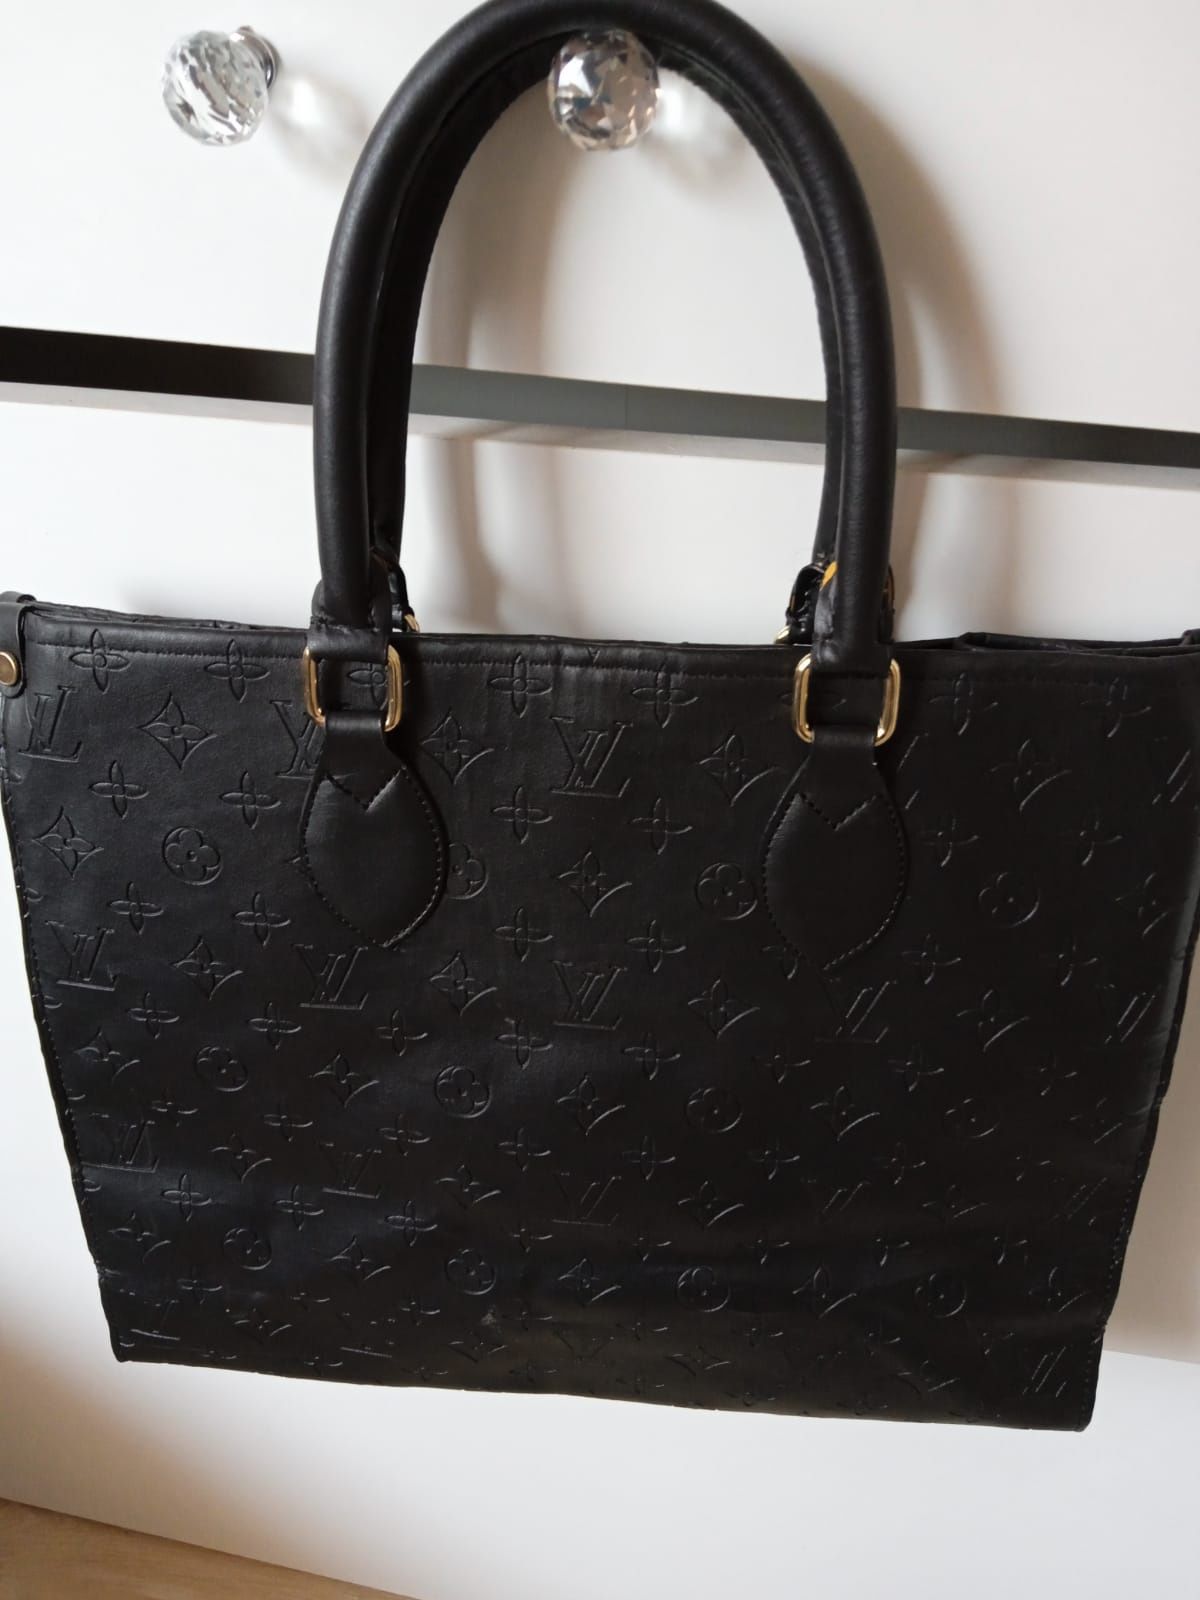 leather Tote bag vintage retro Louis Vuitton